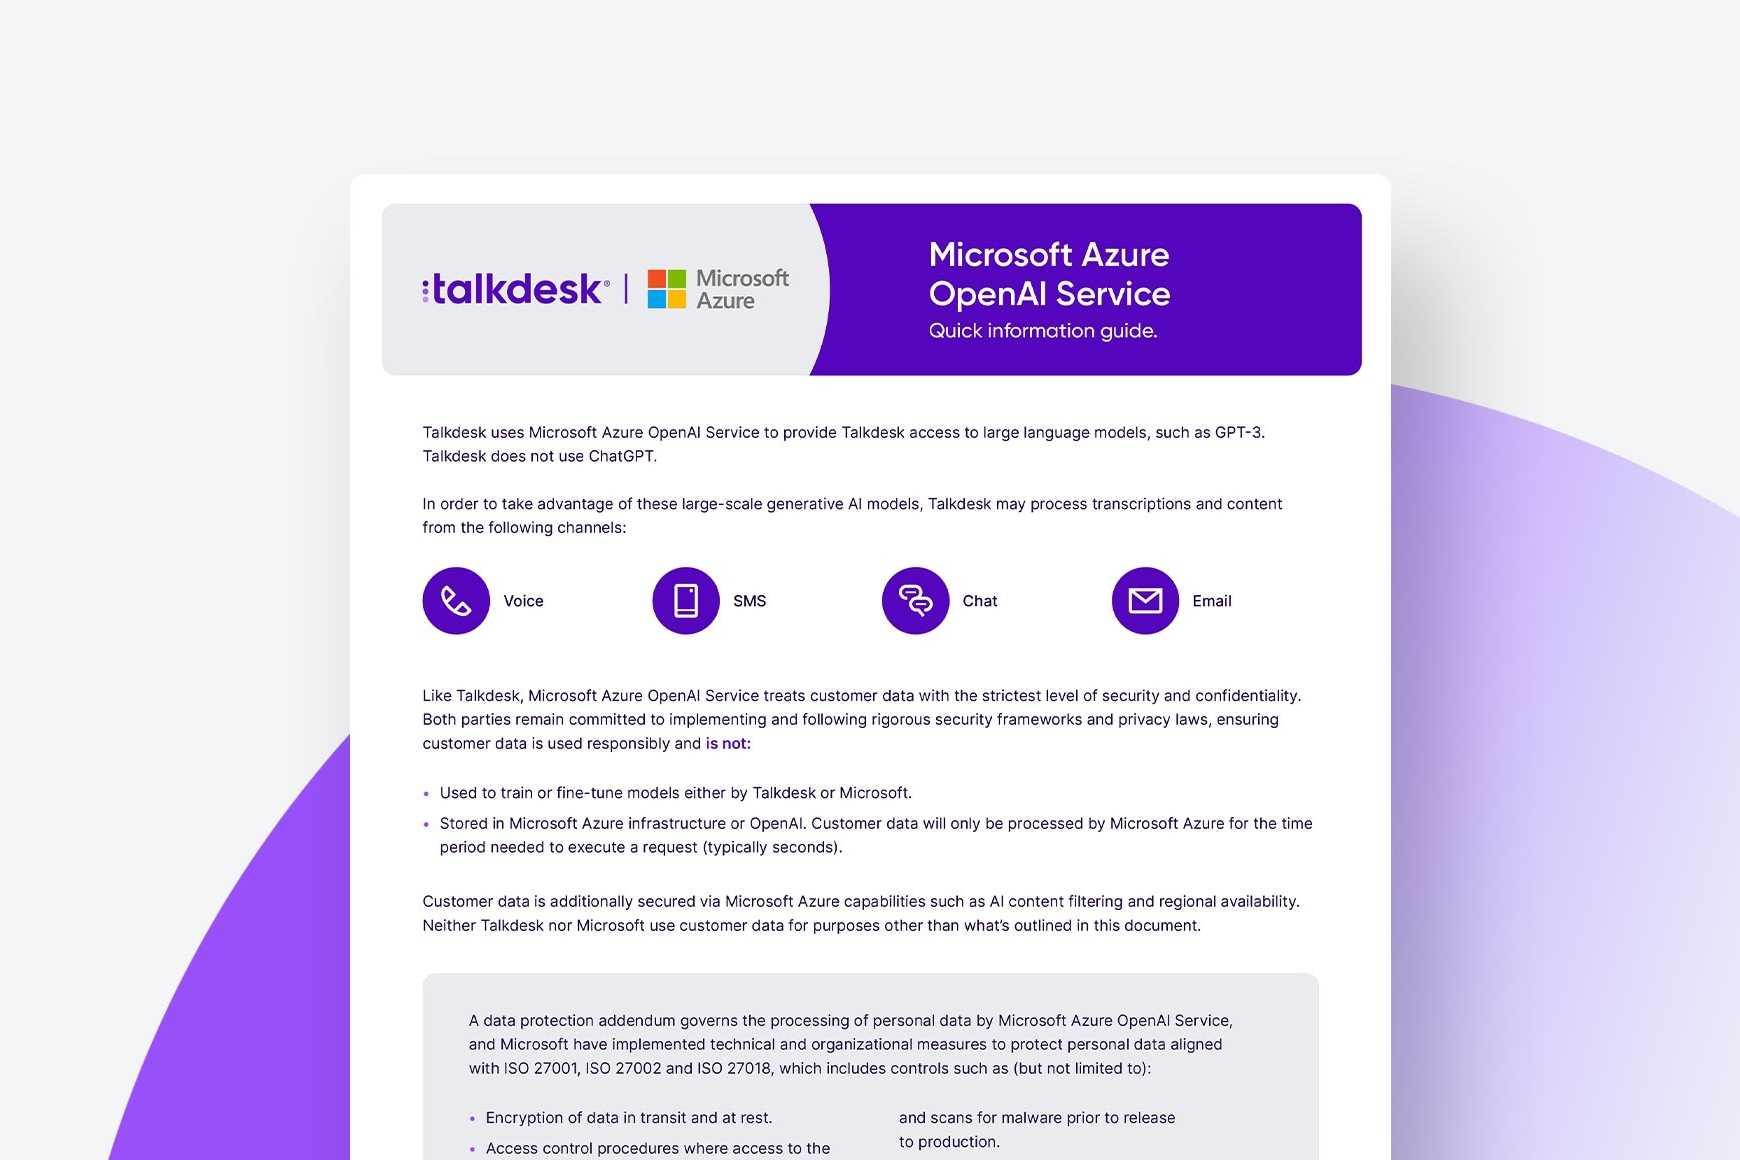 How Talkdesk is leveraging Microsoft Azure OpenAI Service